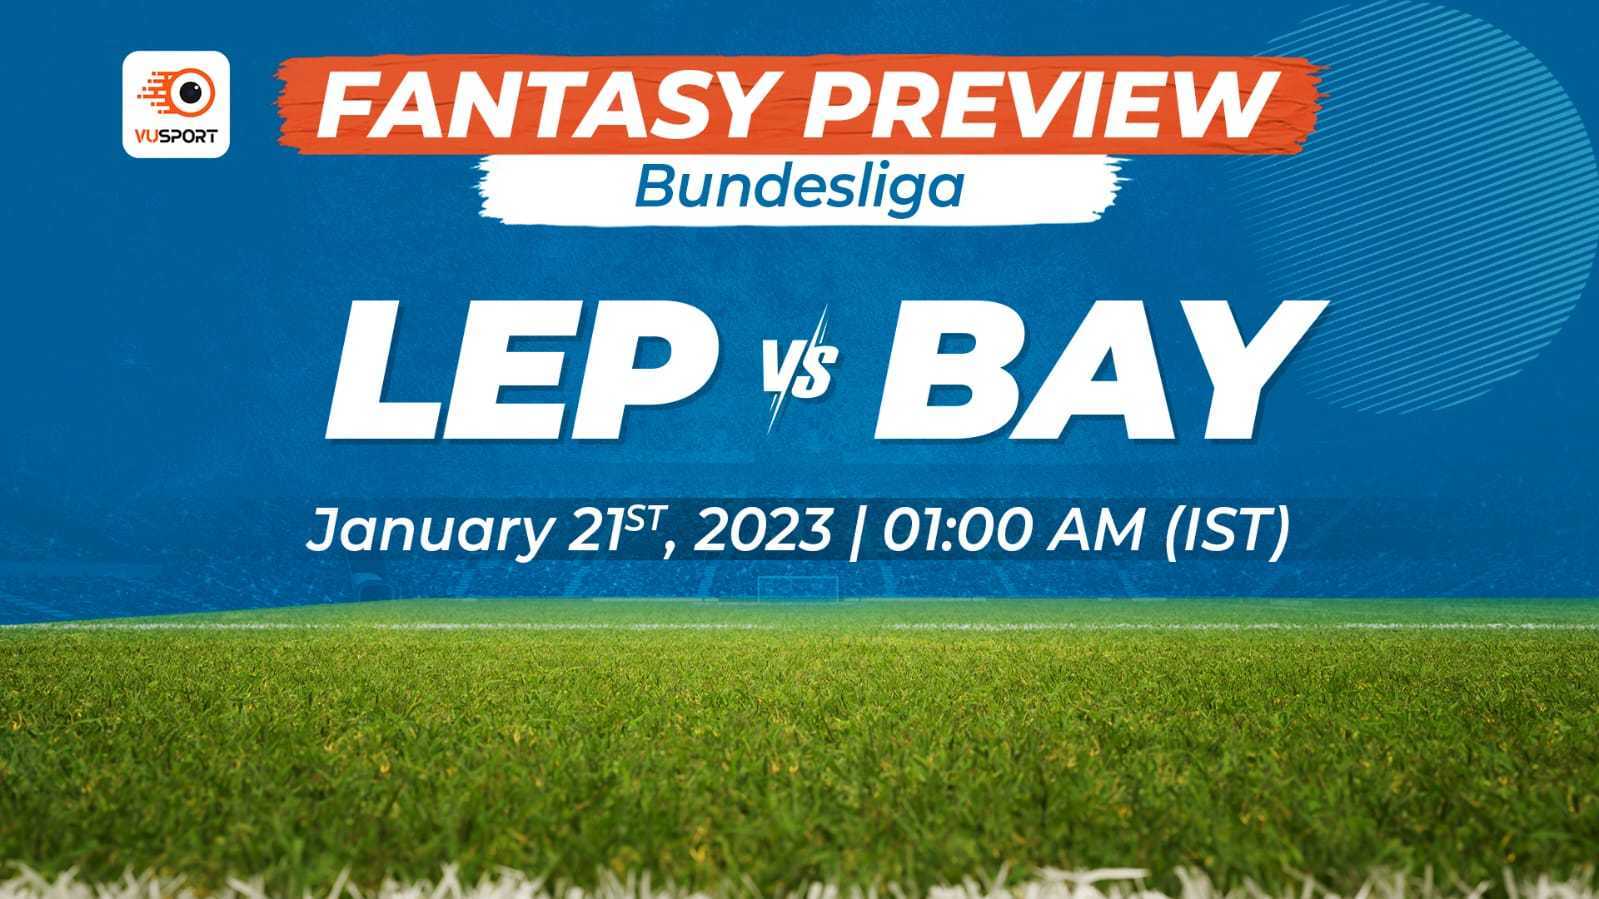 RB Leipzig vs Bayern Munich fantasy preview and prediction